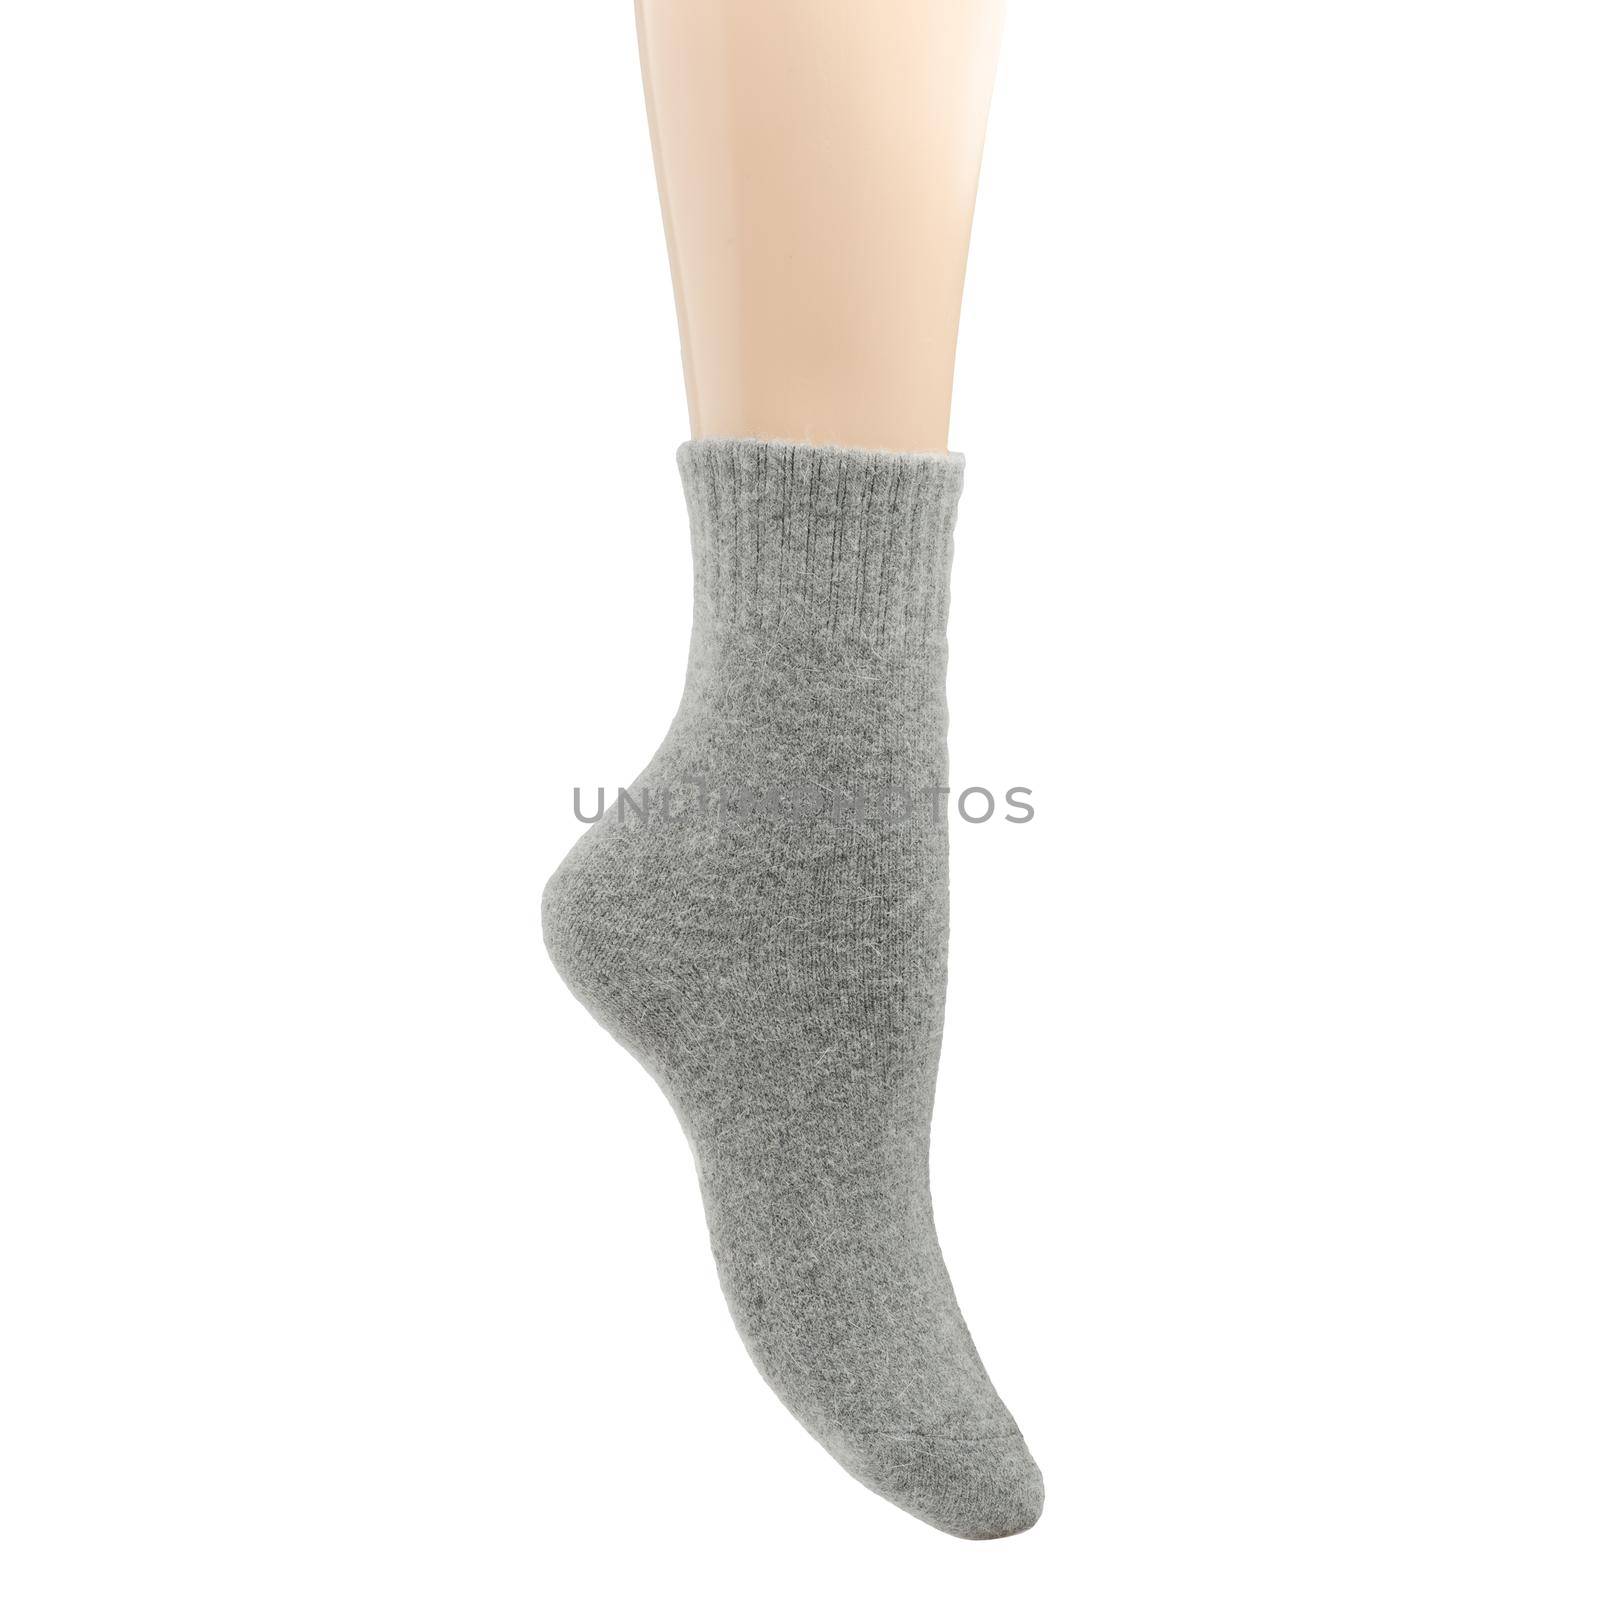 Socks on mannequin leg by nikitabuida